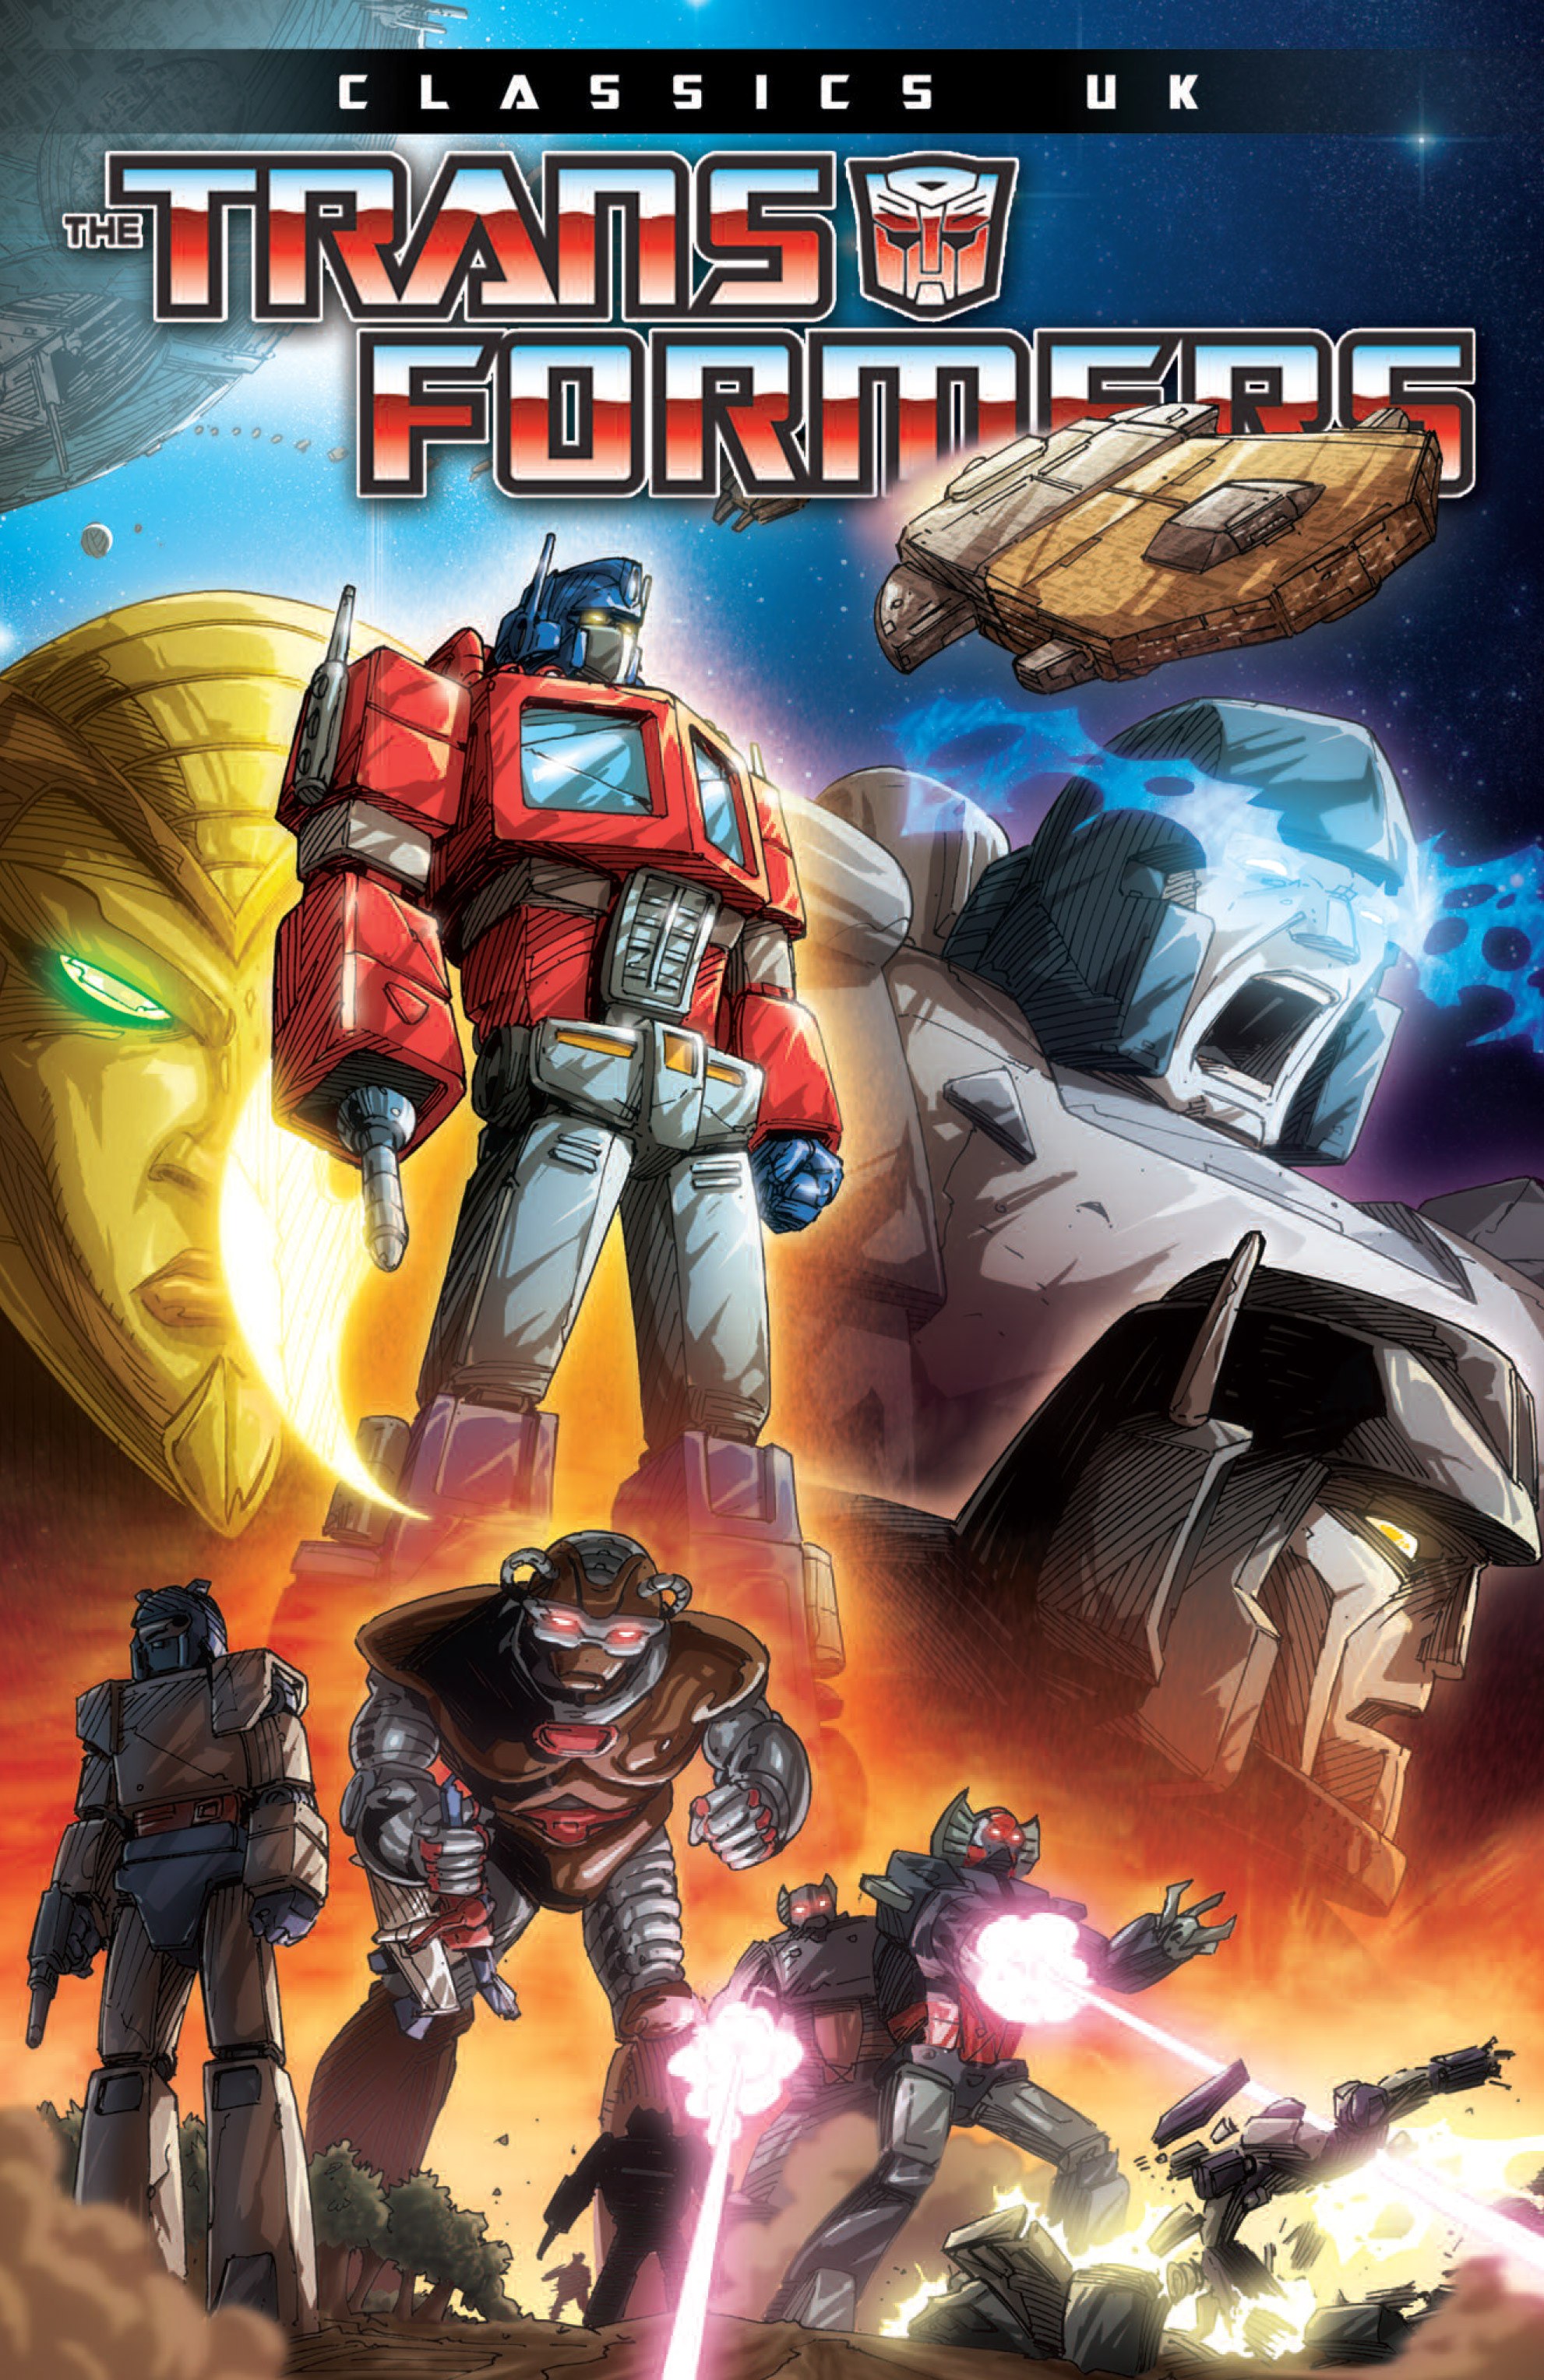 Read online The Transformers Classics UK comic -  Issue # TPB 1 - 1